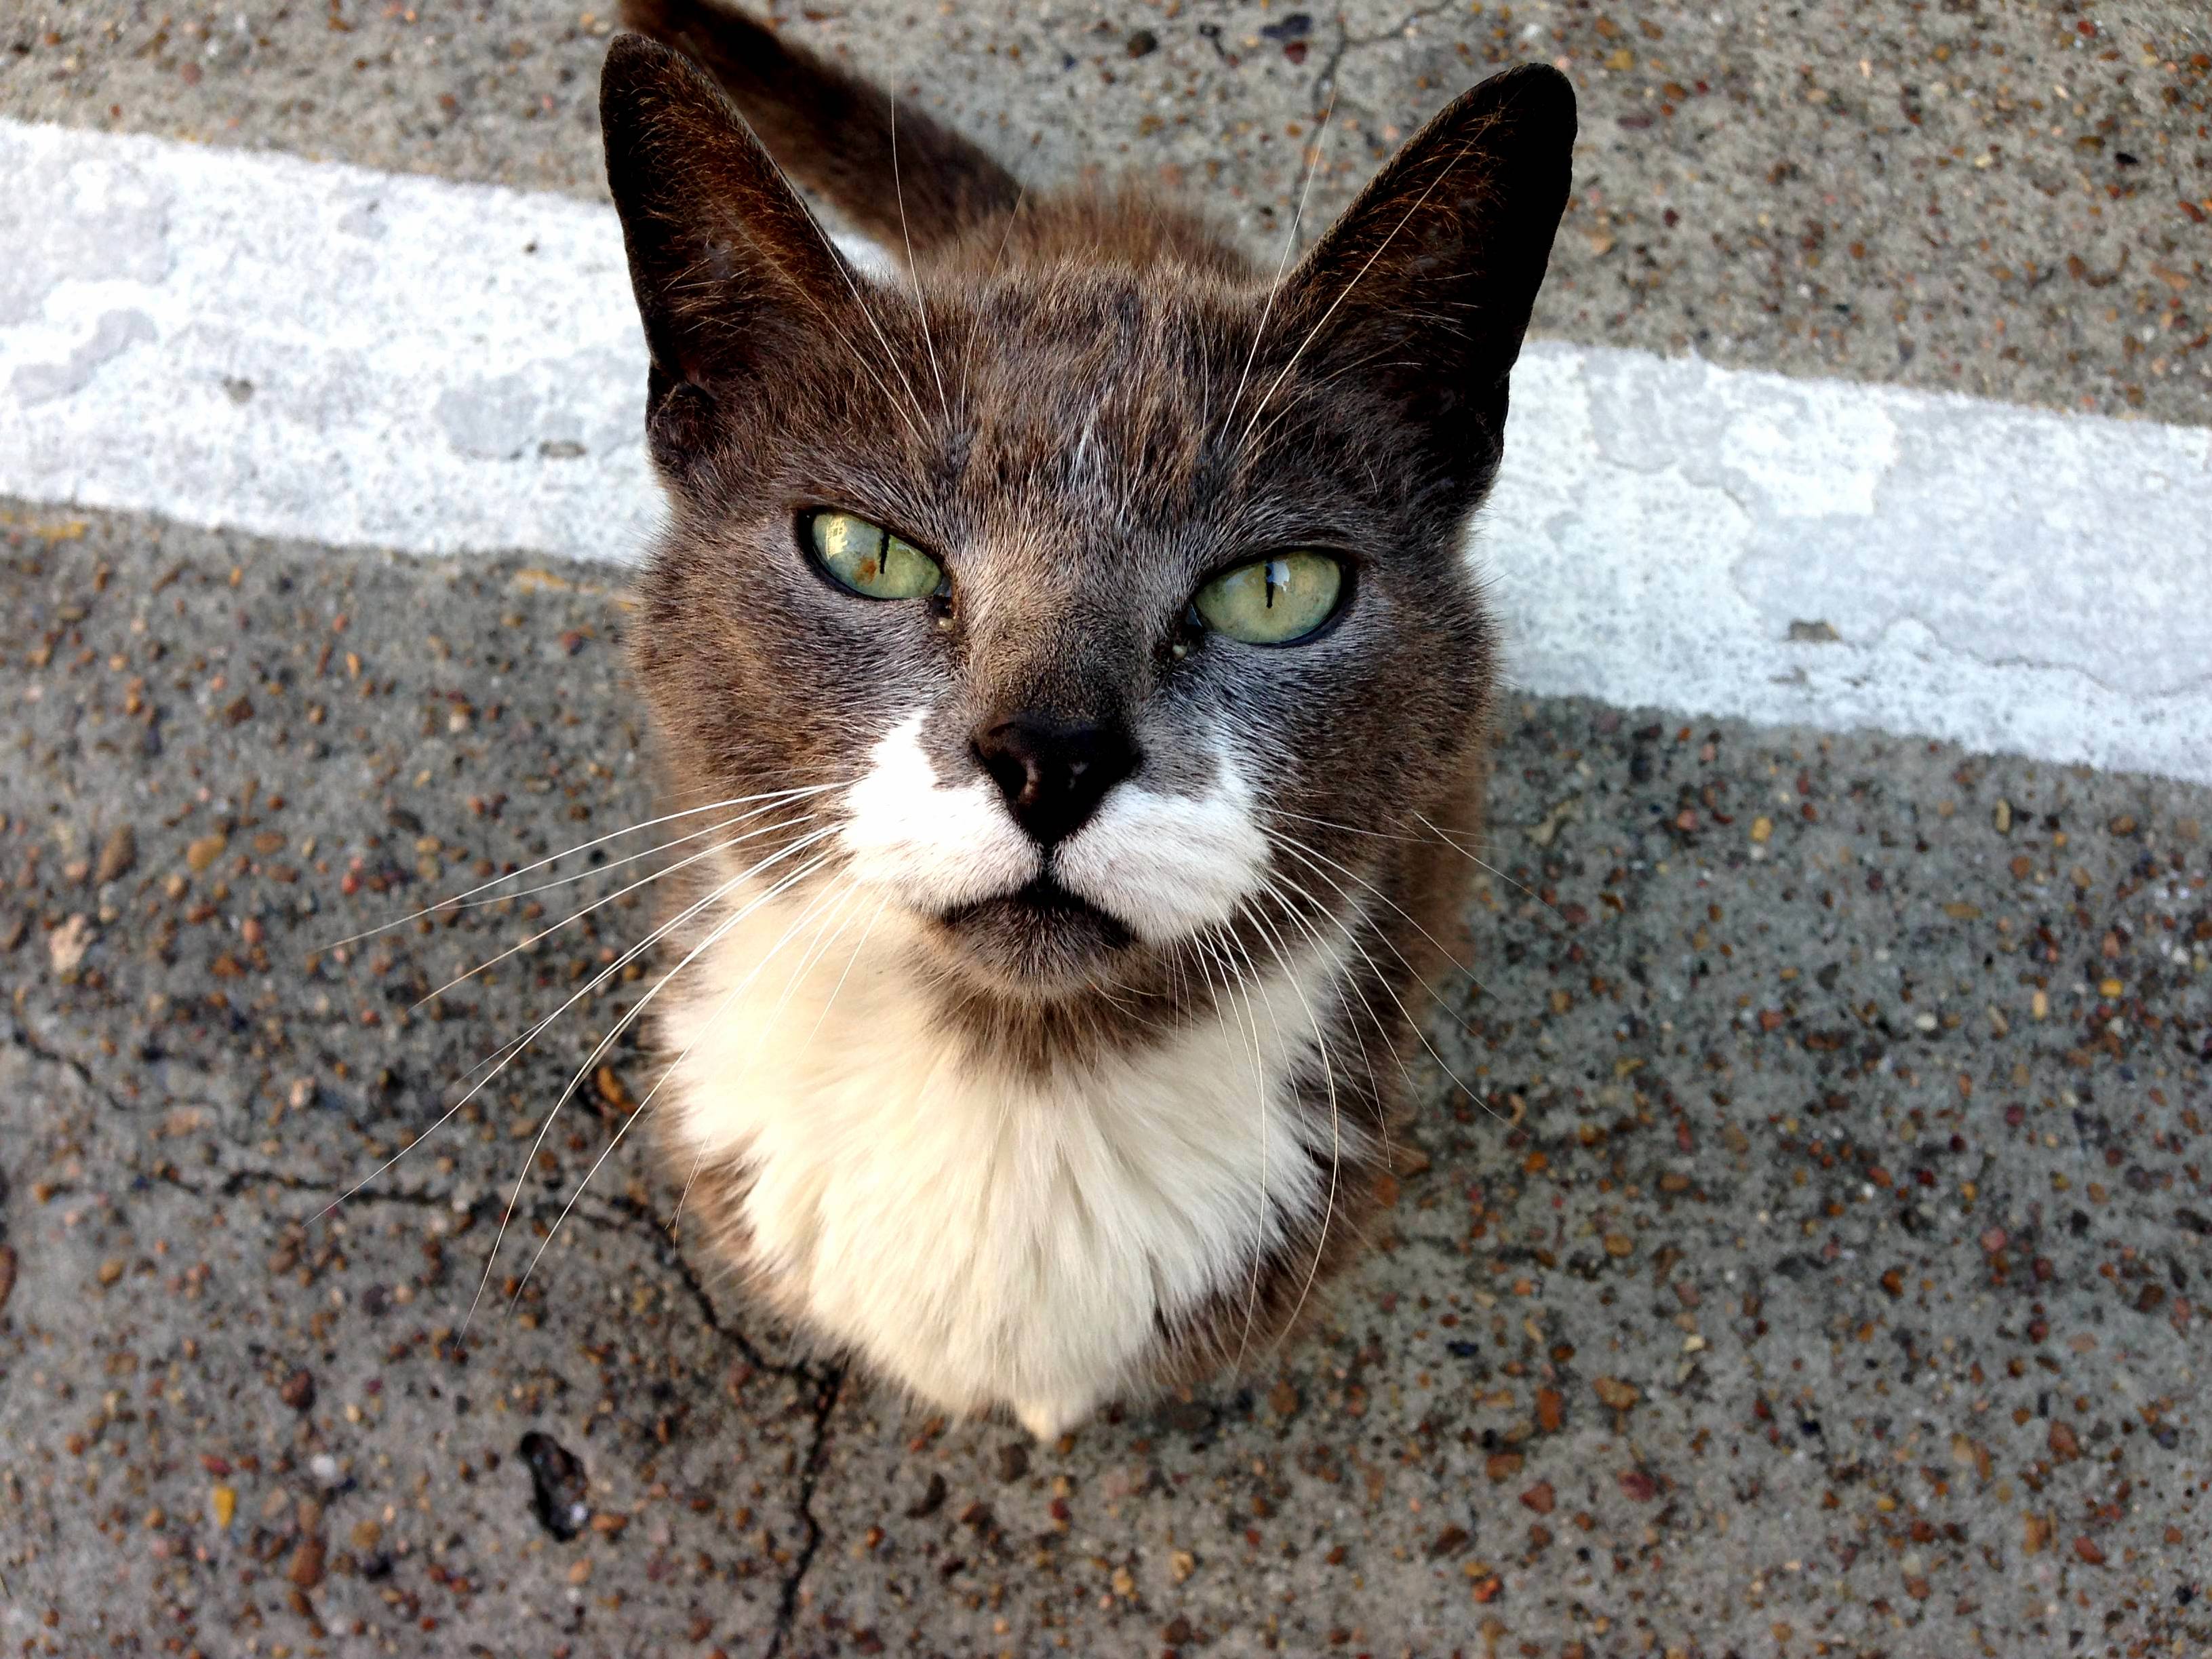 Gentleman cat has perfect moustachebeard. resident of galveston tx.